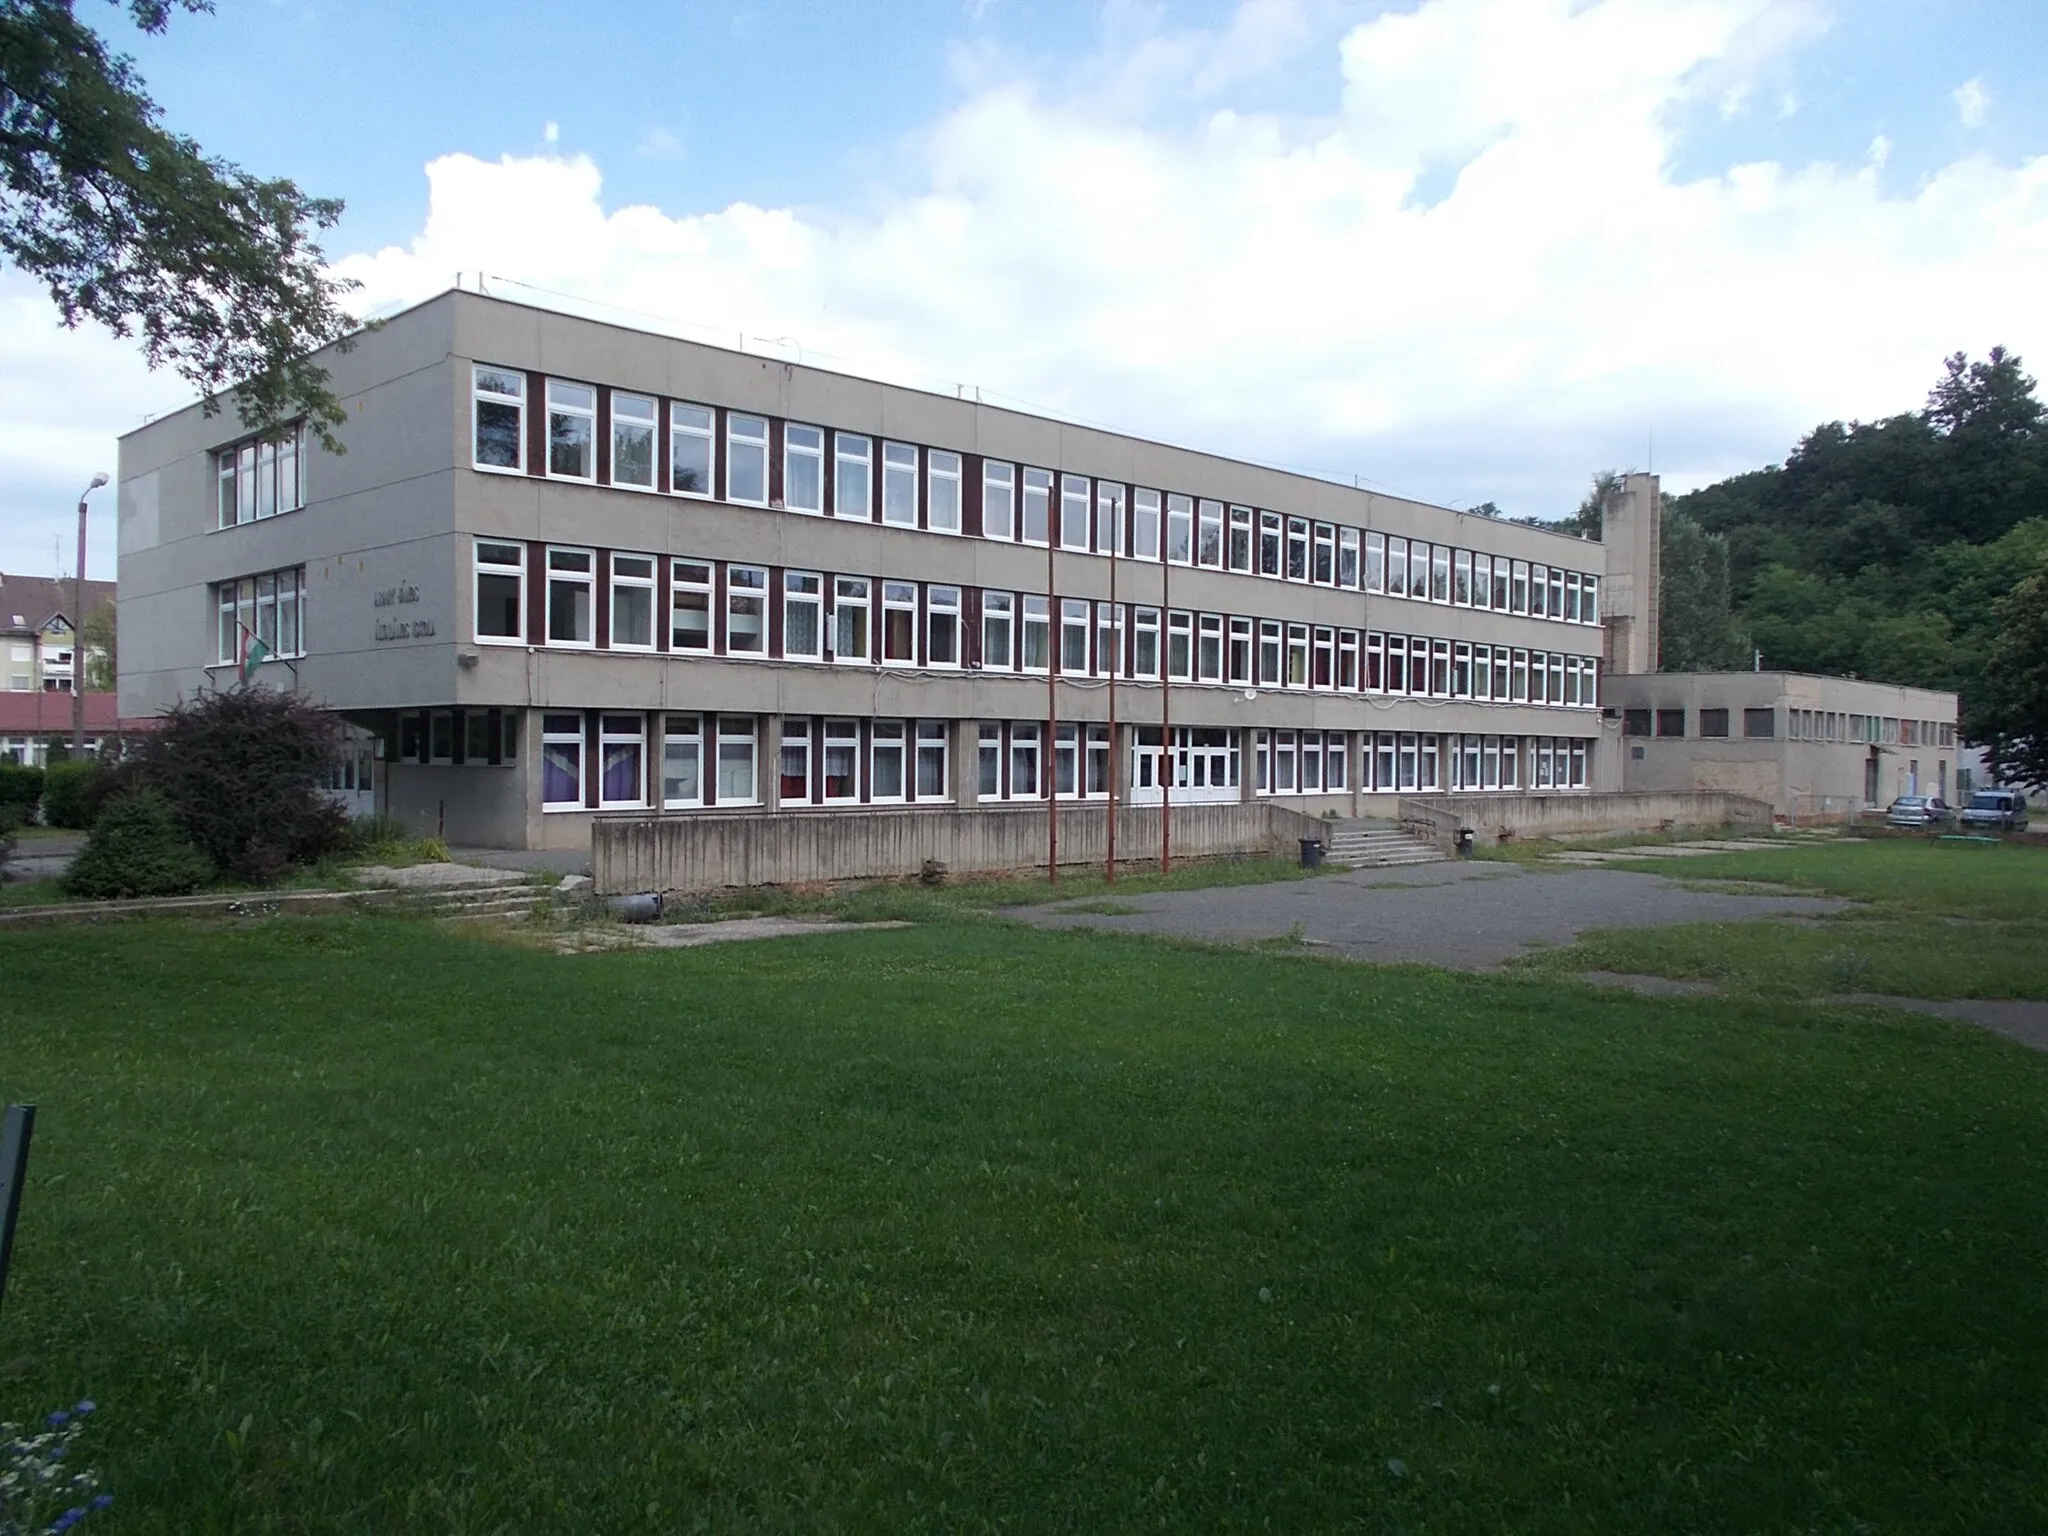 Photo showing: : Arany János Elementary School (Est. 1873). School building built in 1977. - 1 Gorkij Boulevard, Budapesti Road, Zagyvapálfalva, Salgótarján, Nógrád County, Hungary.